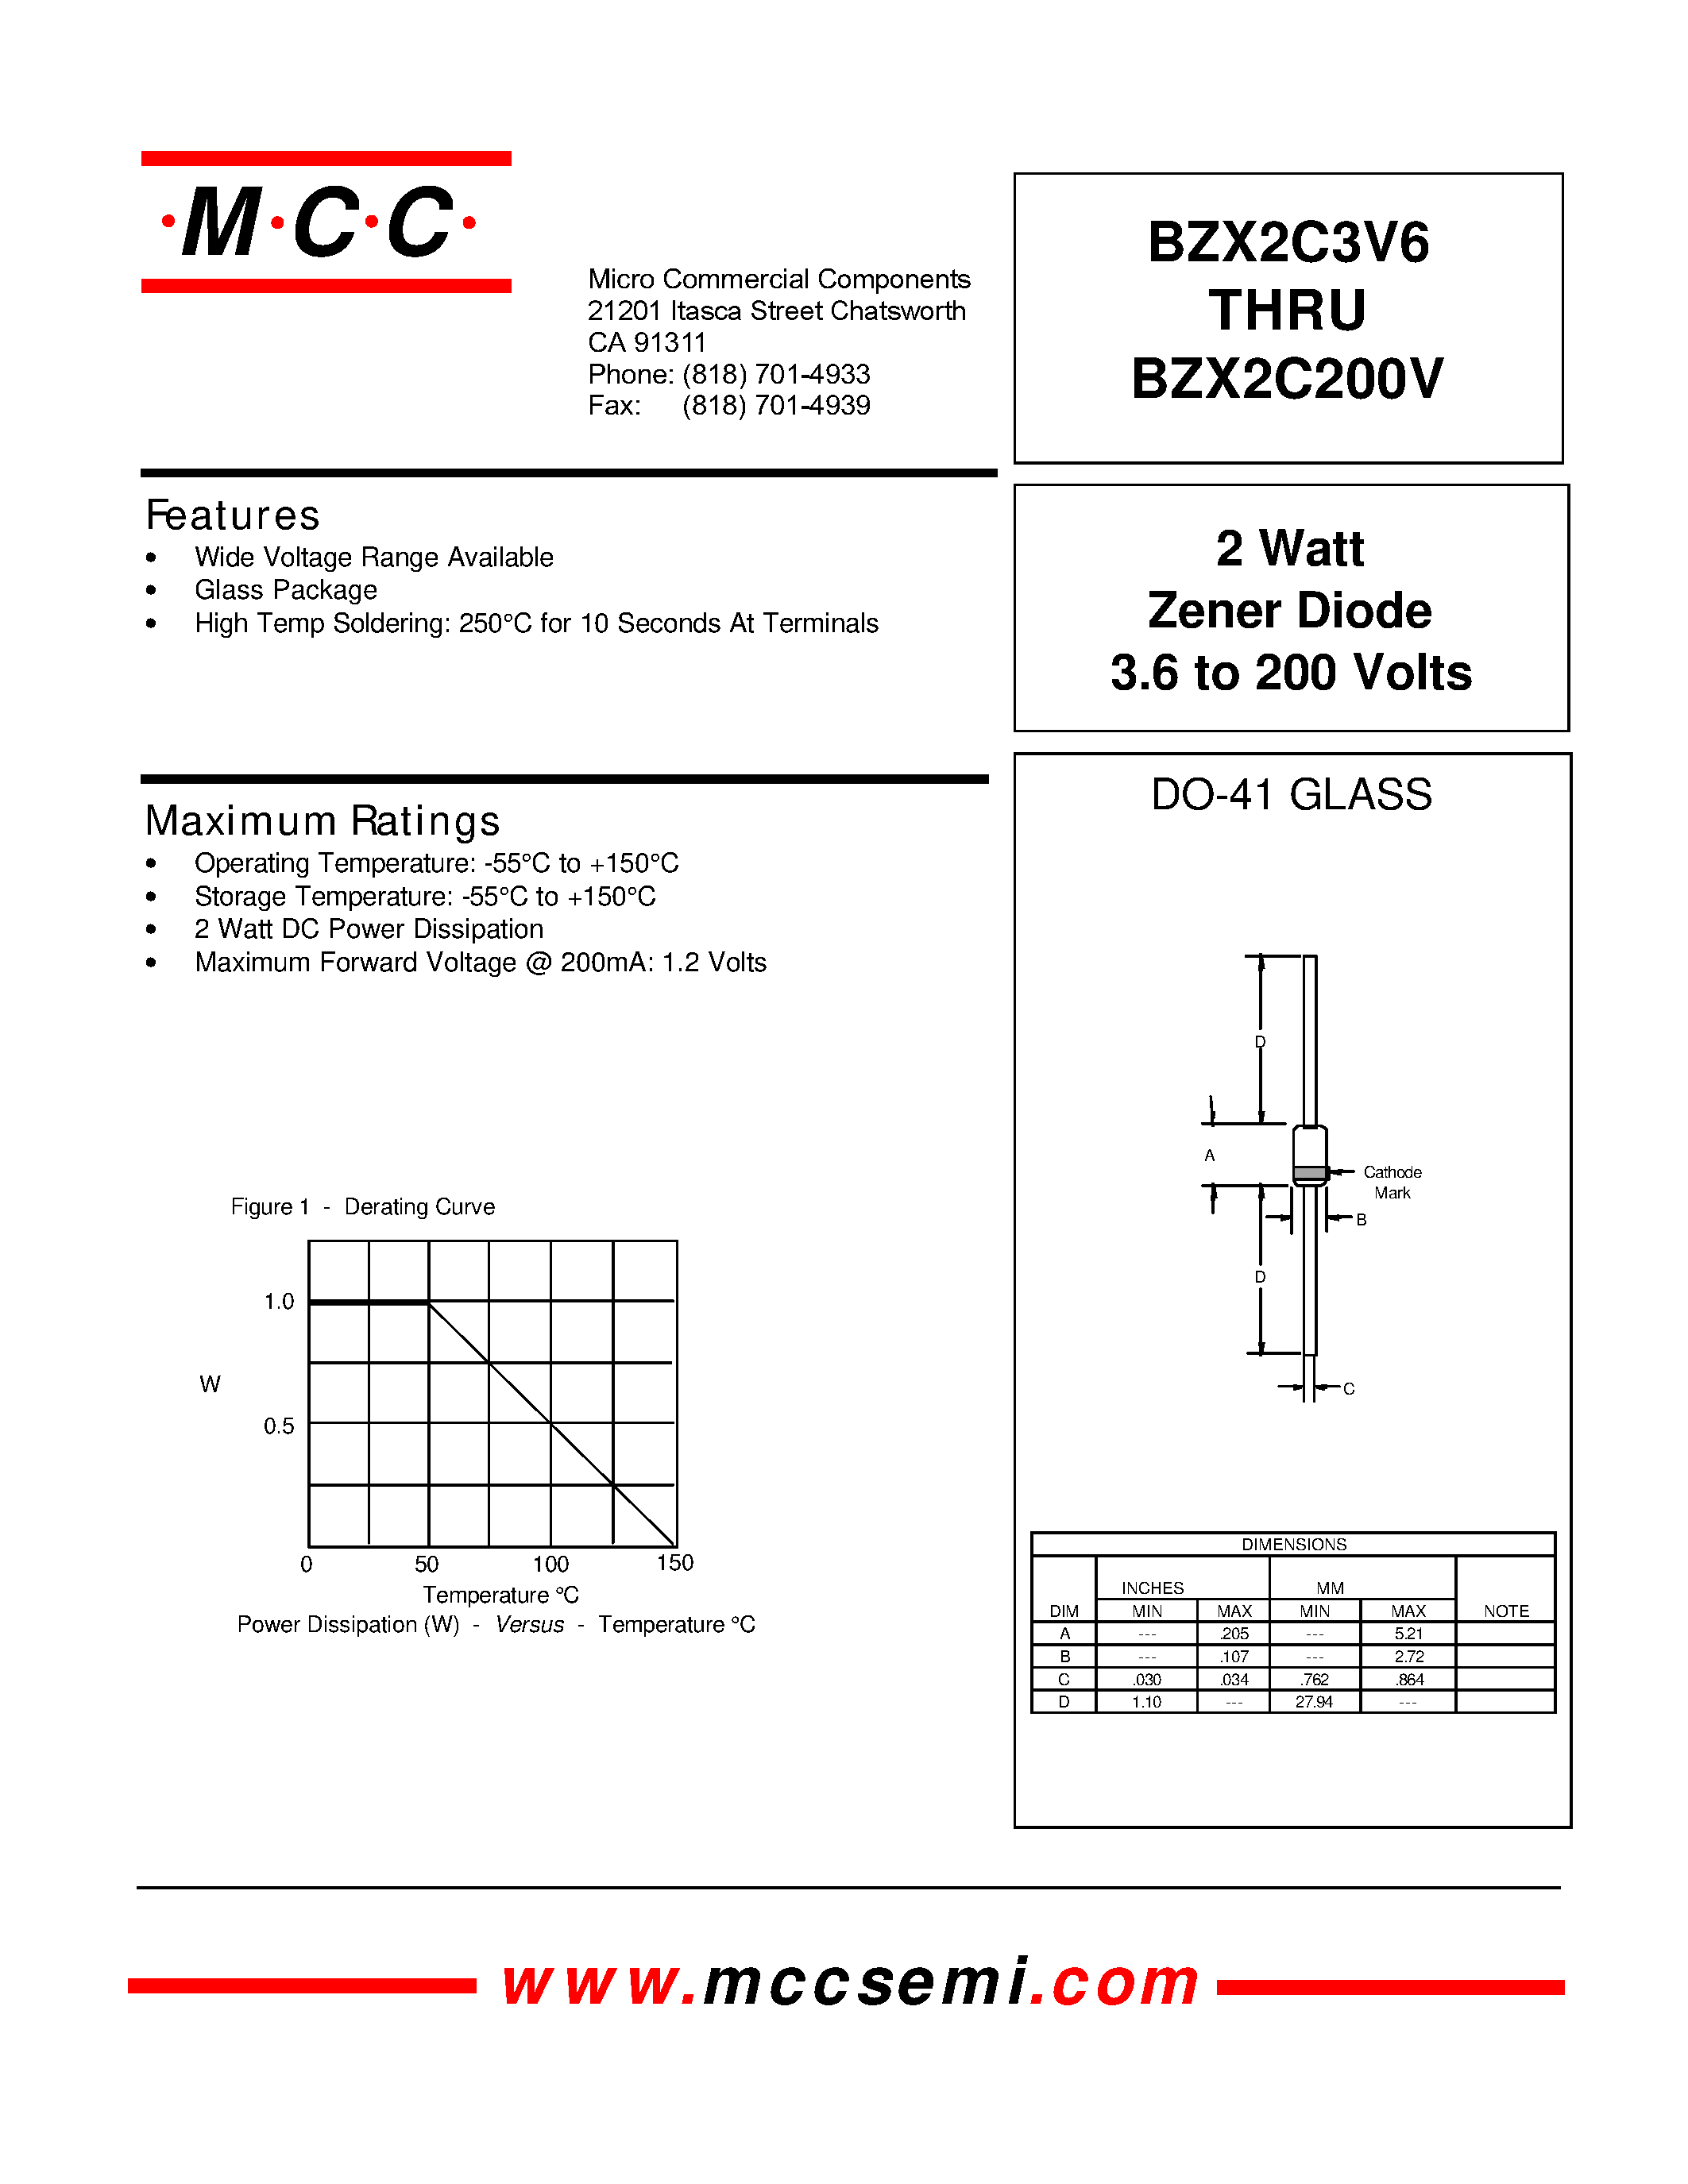 Datasheet BZX2C68V - 2 Watt Zener Diode 3.6 to 200 Volts page 1